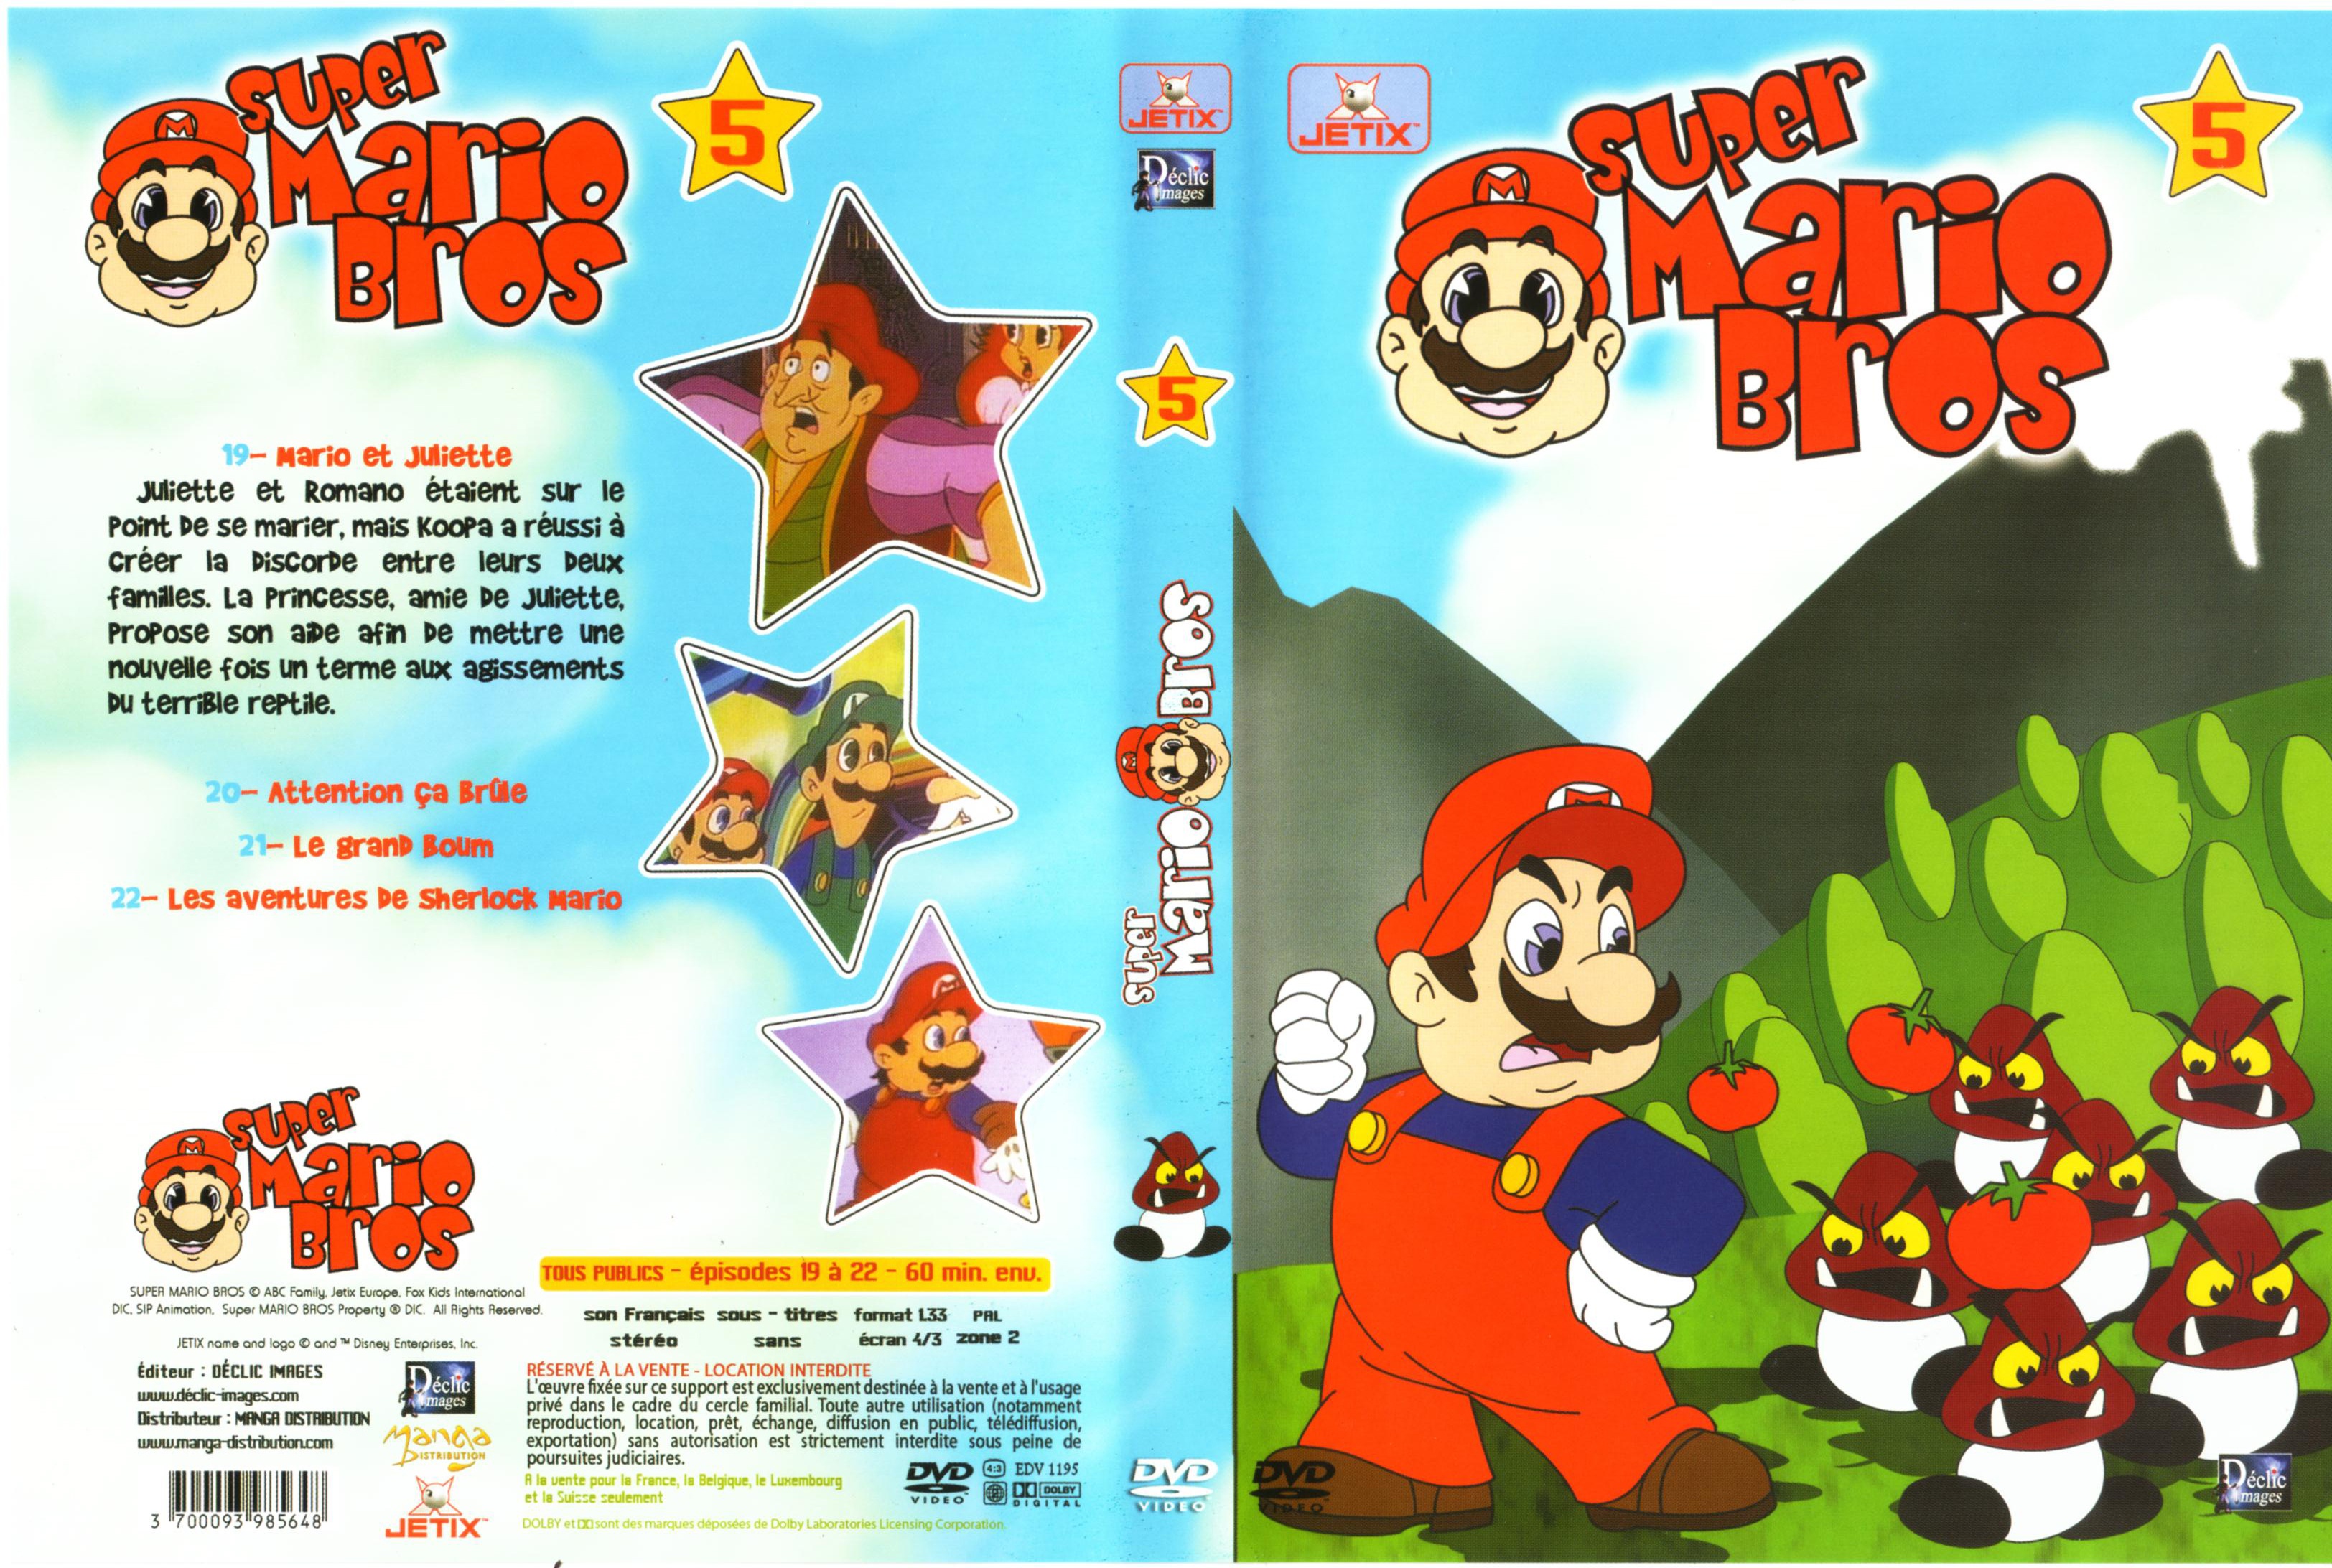 Jaquette DVD Super Mario Bros vol 5